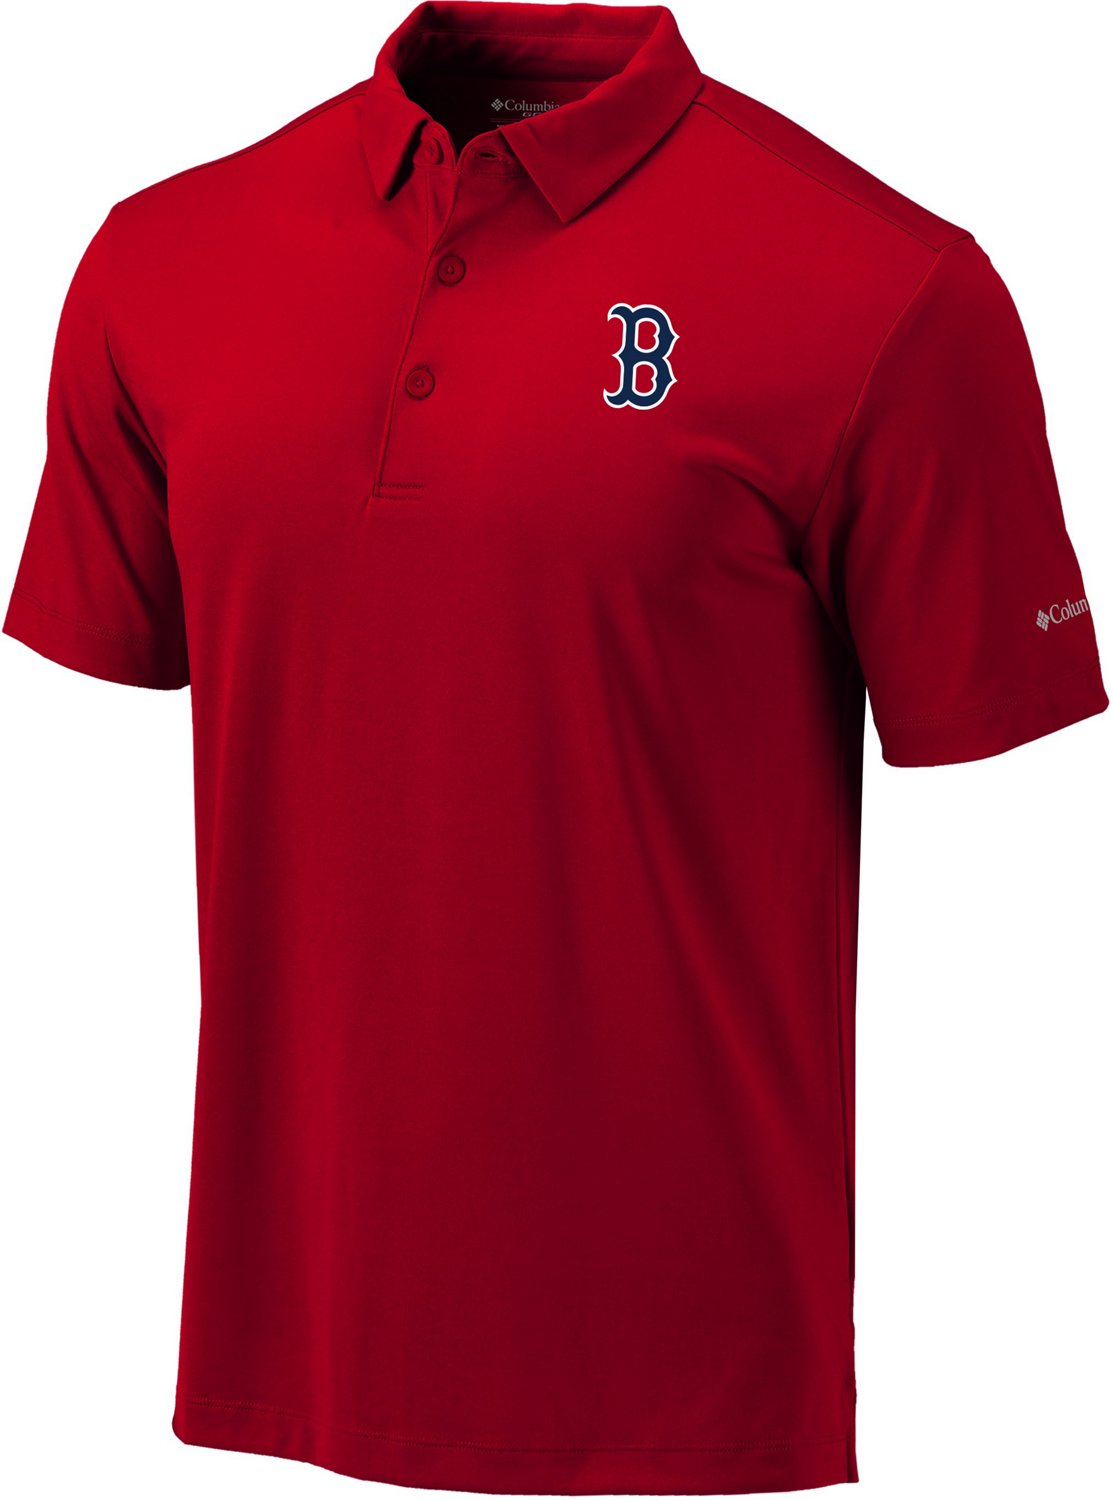 Columbia Sportswear Men's Boston Red Sox Drive Polo Shirt